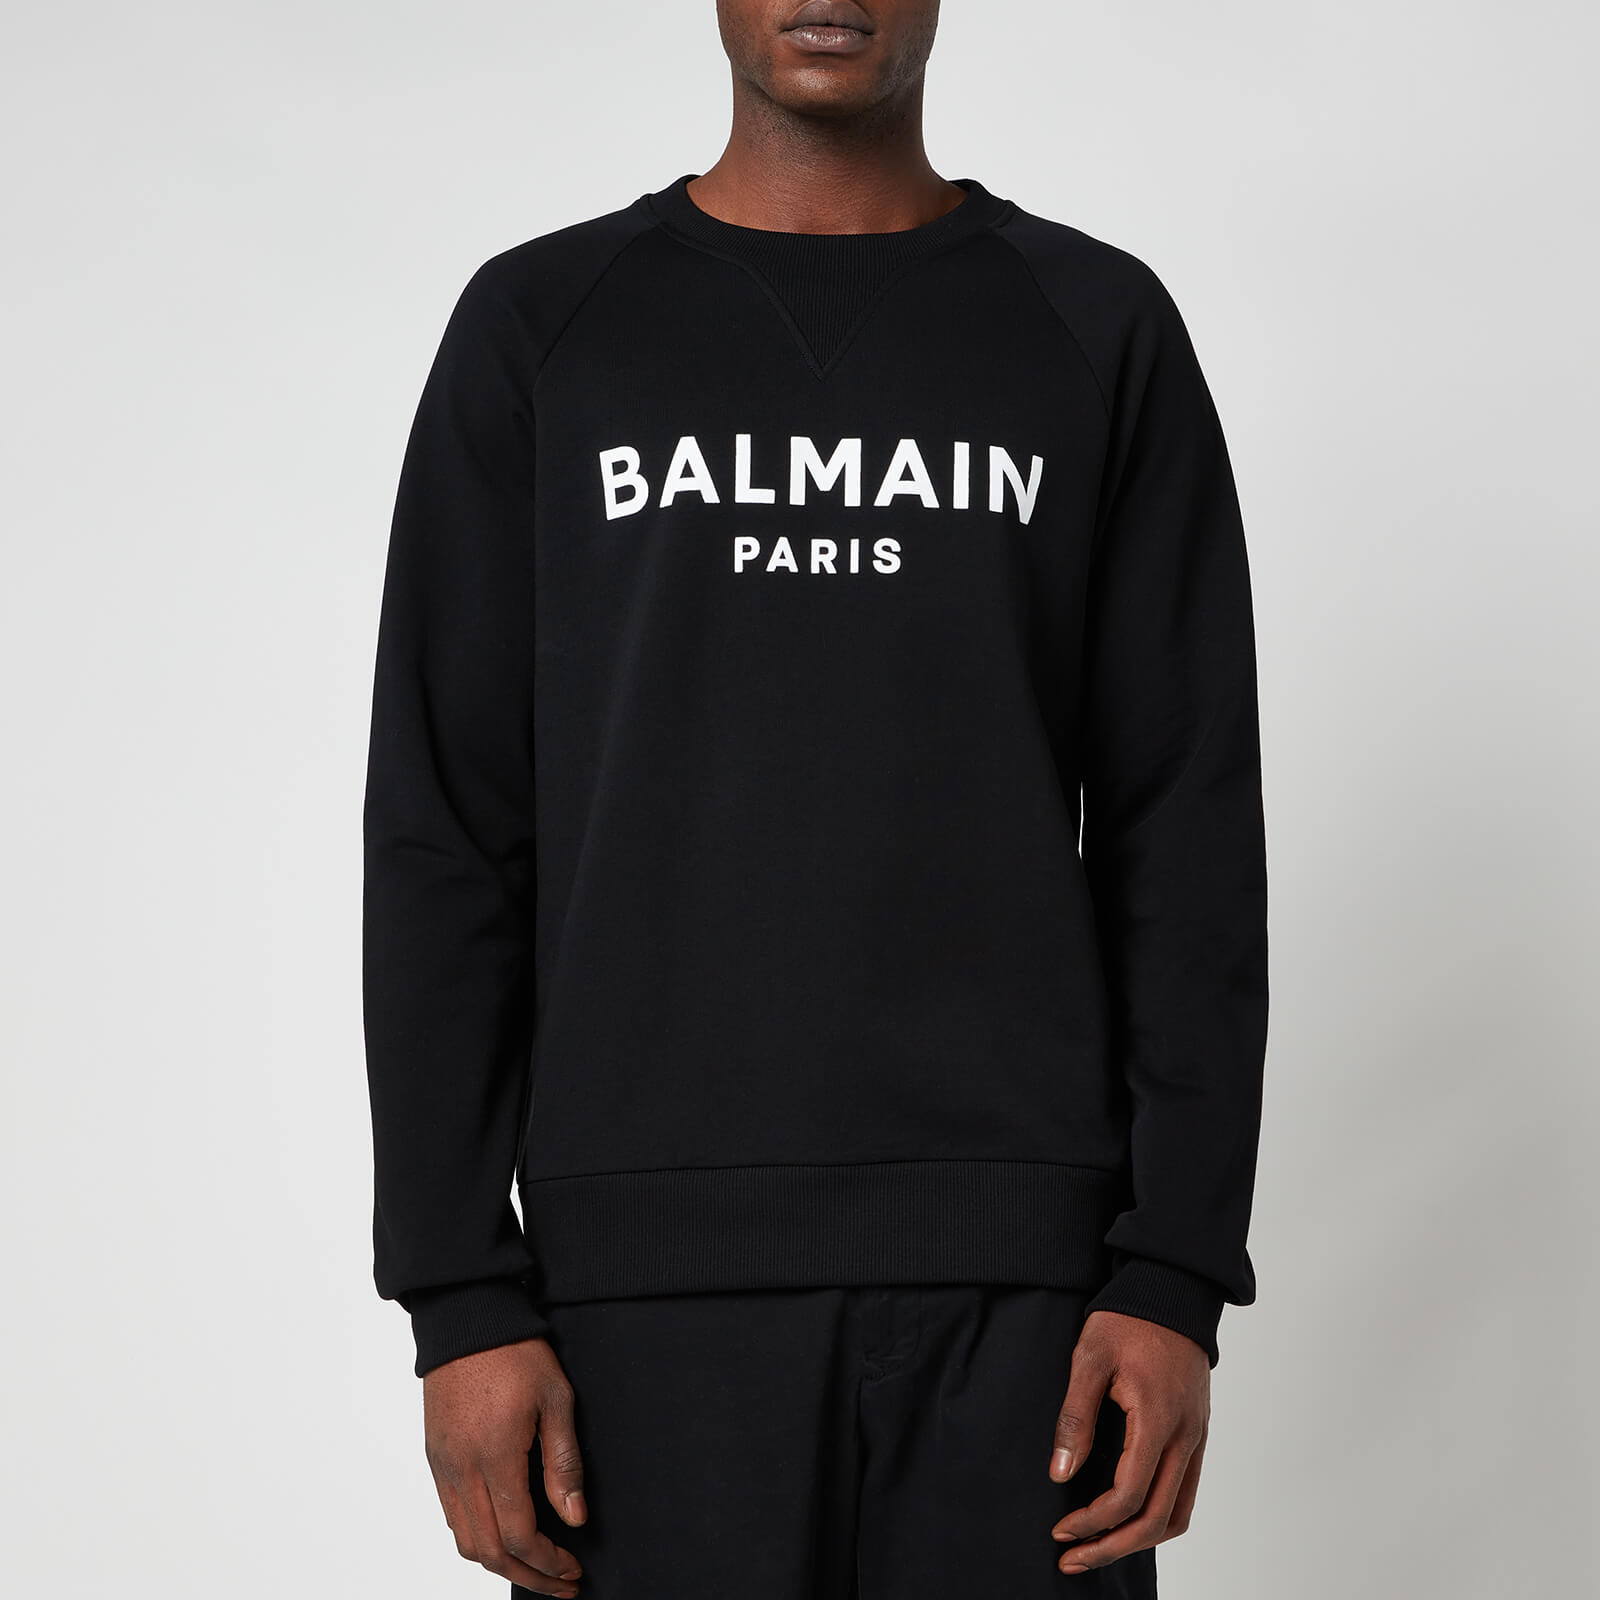 Balmain Men's Flock Sweatshirt - Black/White - XL